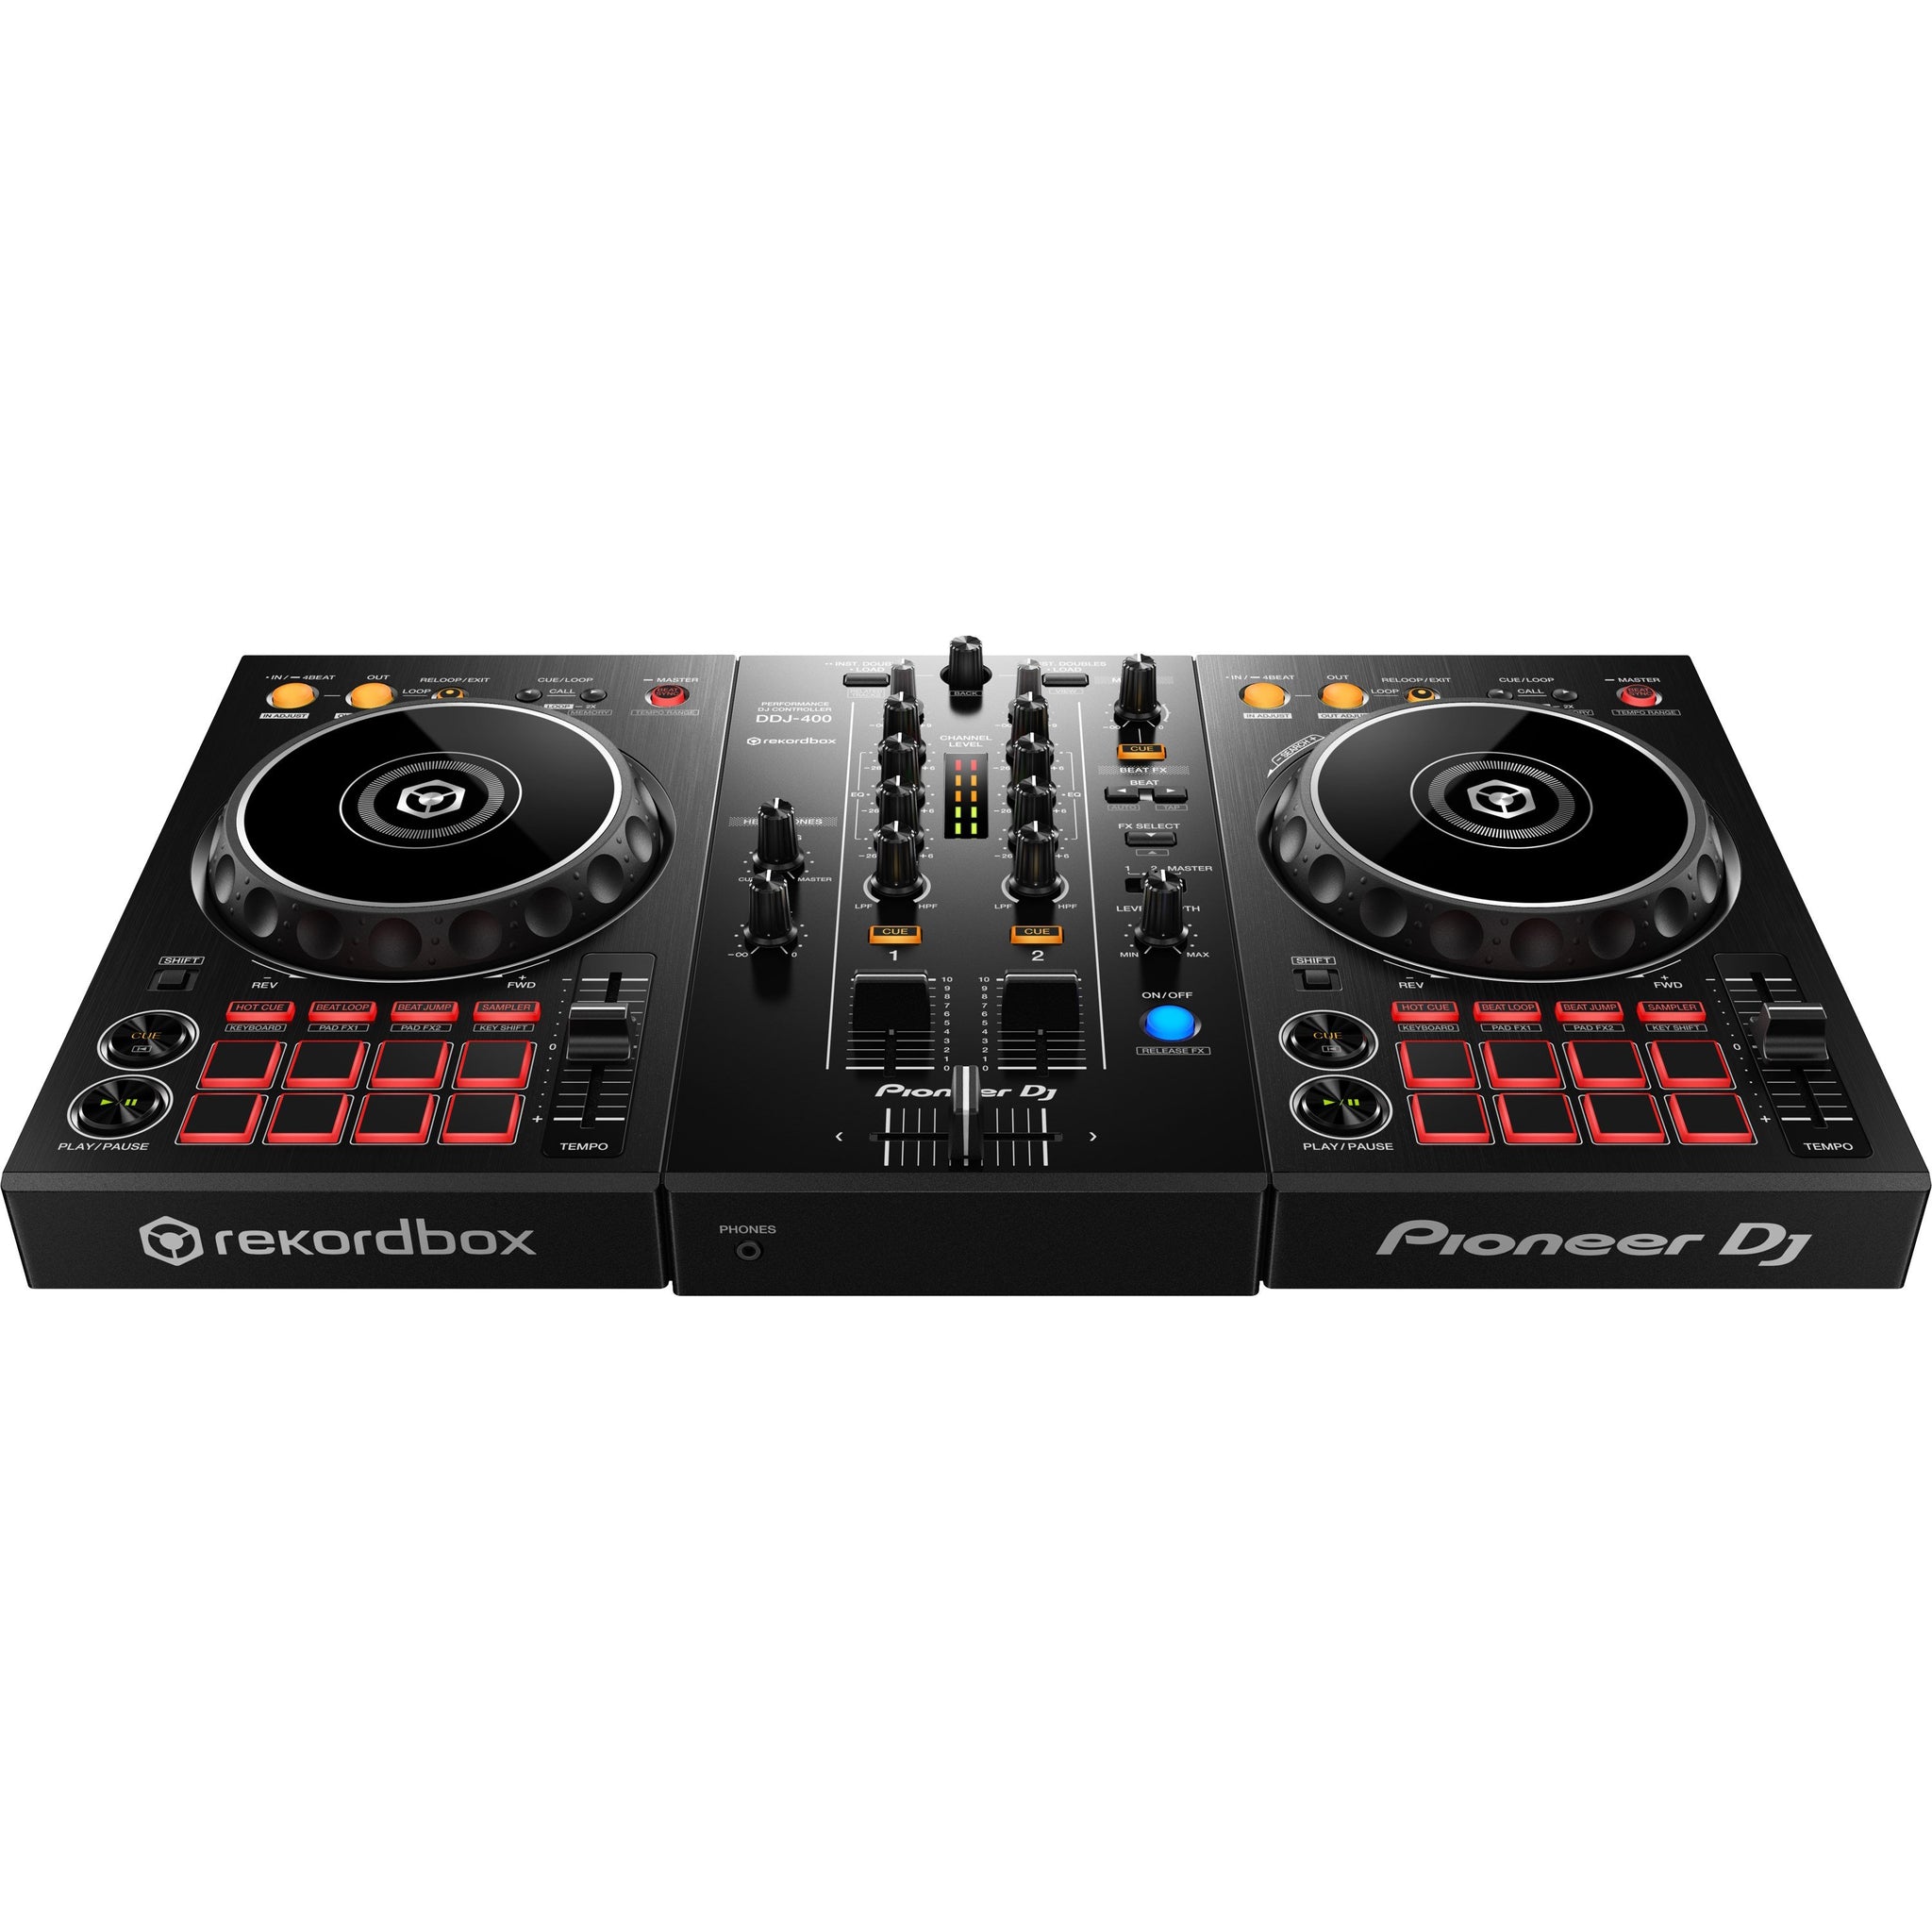 Pioneer DDJ-400 2-channel DJ controller for rekordbox dj, Black